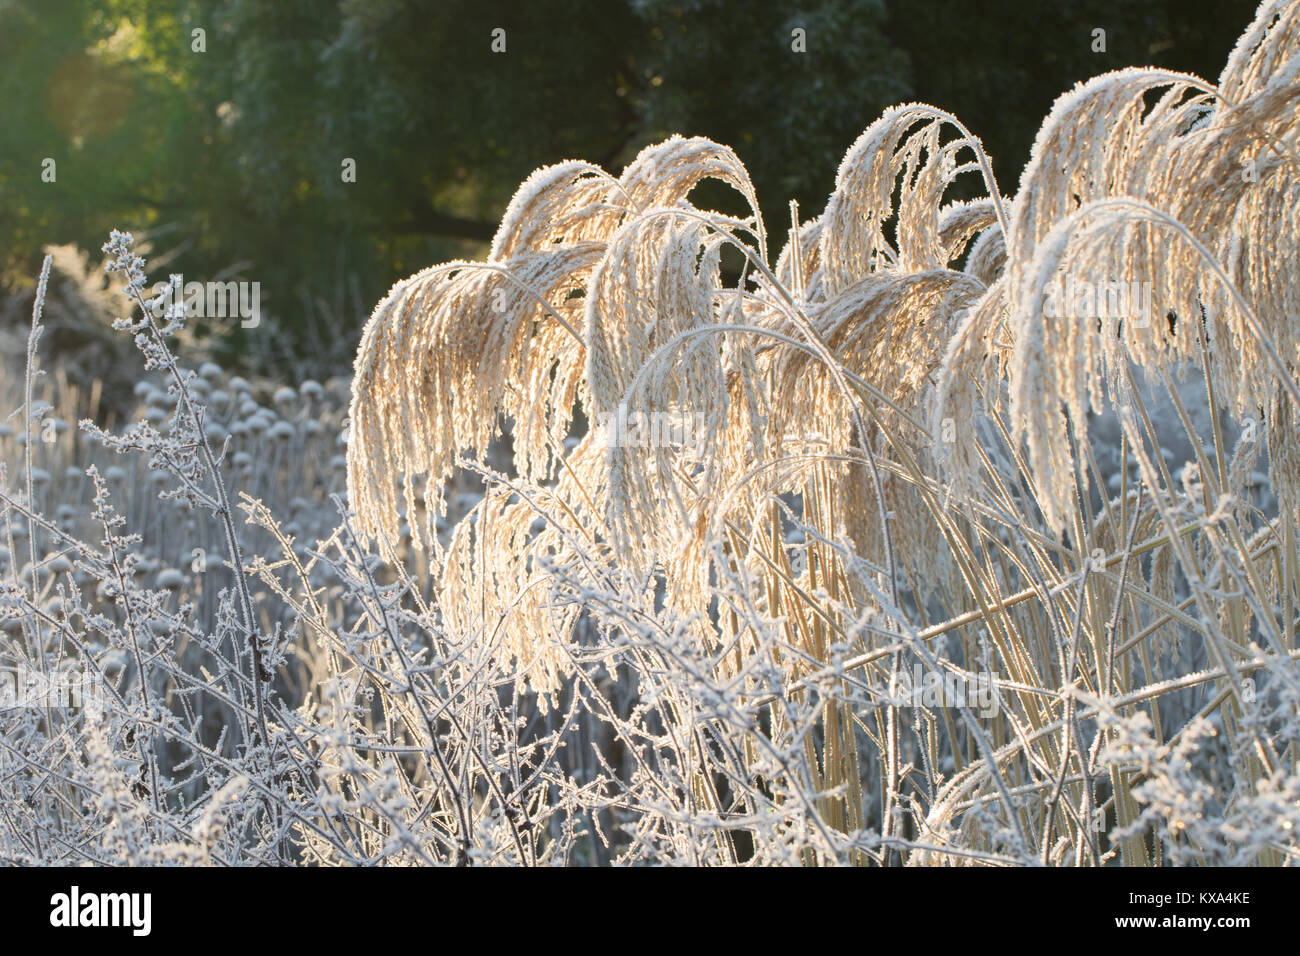 Un matin glacial et froid au RHS Garden Harlow Carr,,North Yorkshire, Angleterre, Royaume-Uni. Banque D'Images